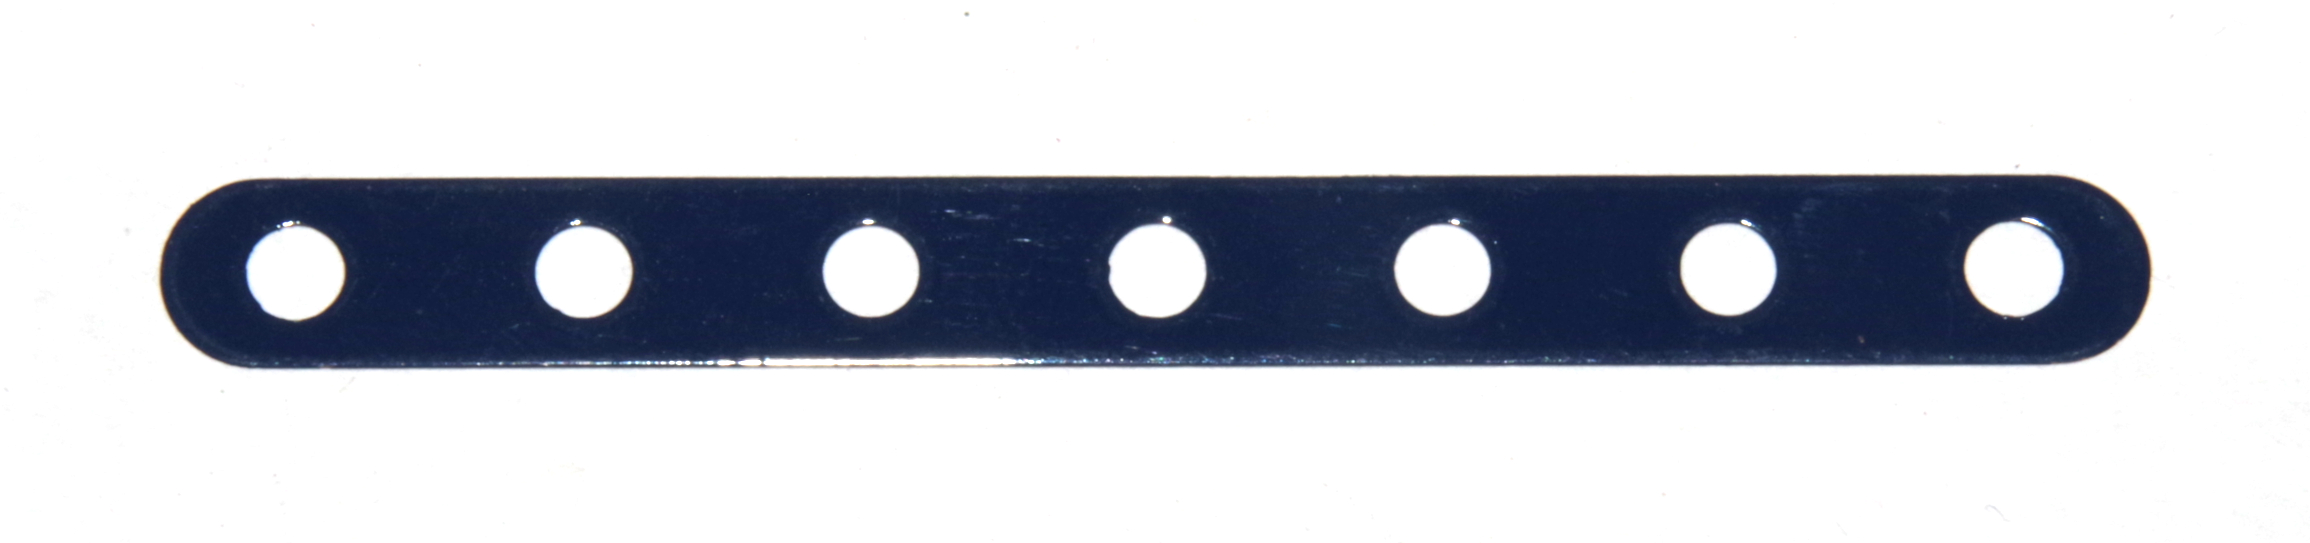 B973 Flexible Narrow Strip 7 Hole Dark Blue Original